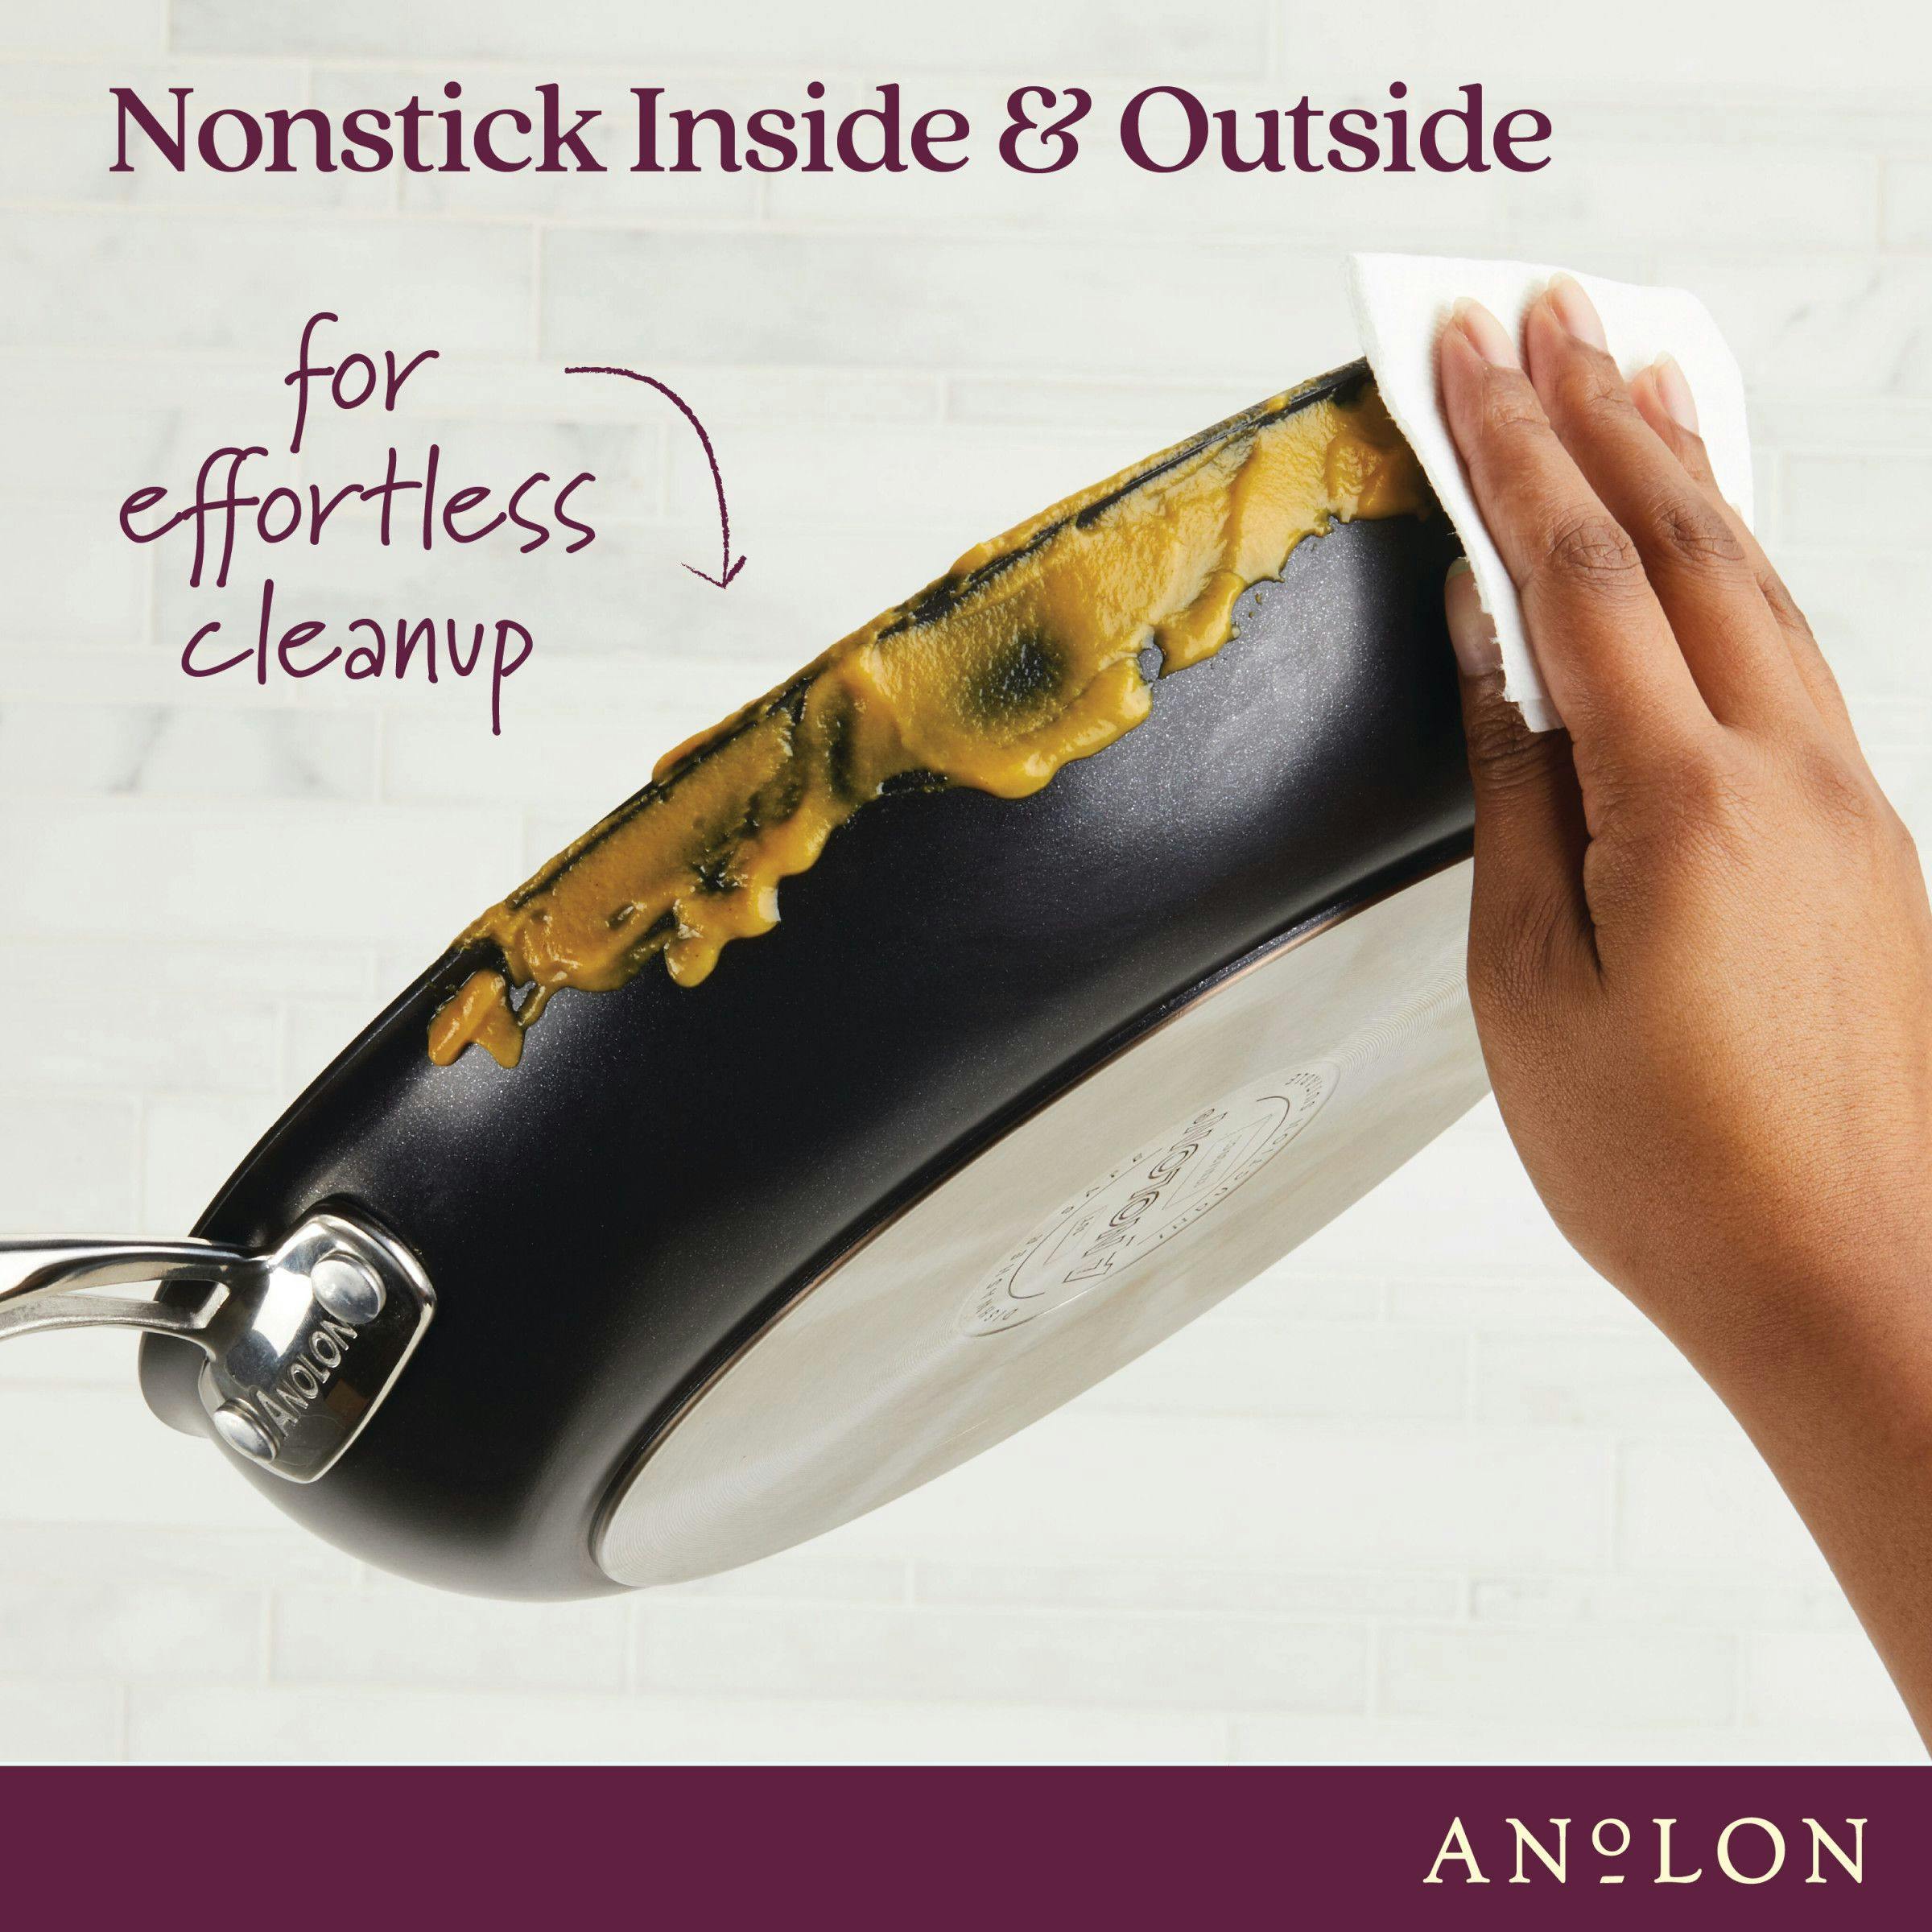 Anolon SmartStack Hard-Anodized Nonstick Cookware Induction Pots and Pans Set, 10-Piece